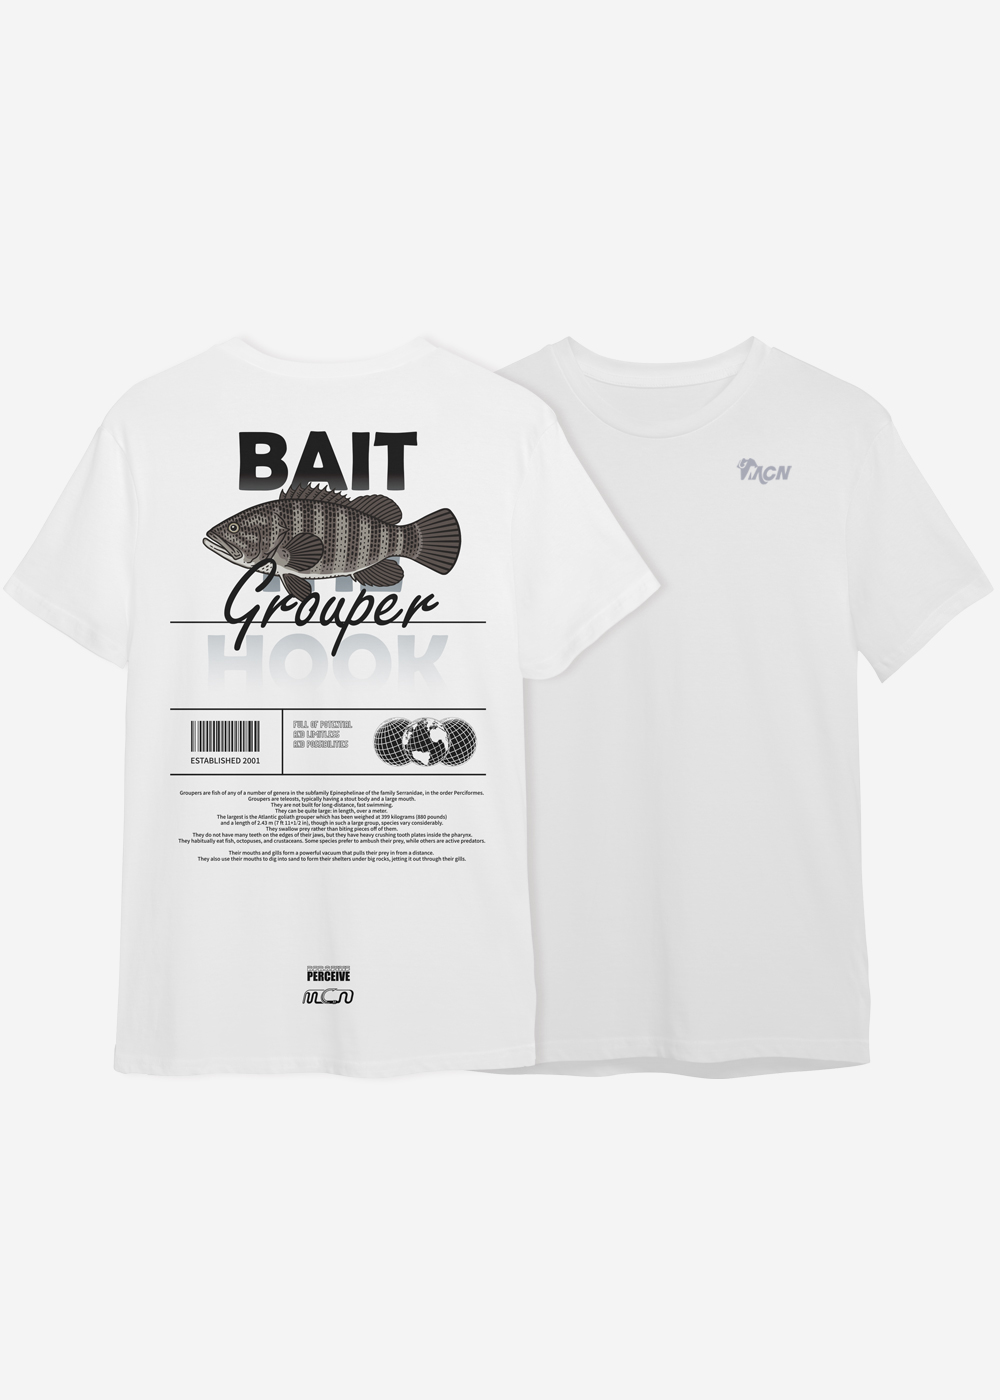 mcnfishing[MFTS-GROUPER] 농어 경량 스판 기능성 반팔 티셔츠 (화이트, 블랙)